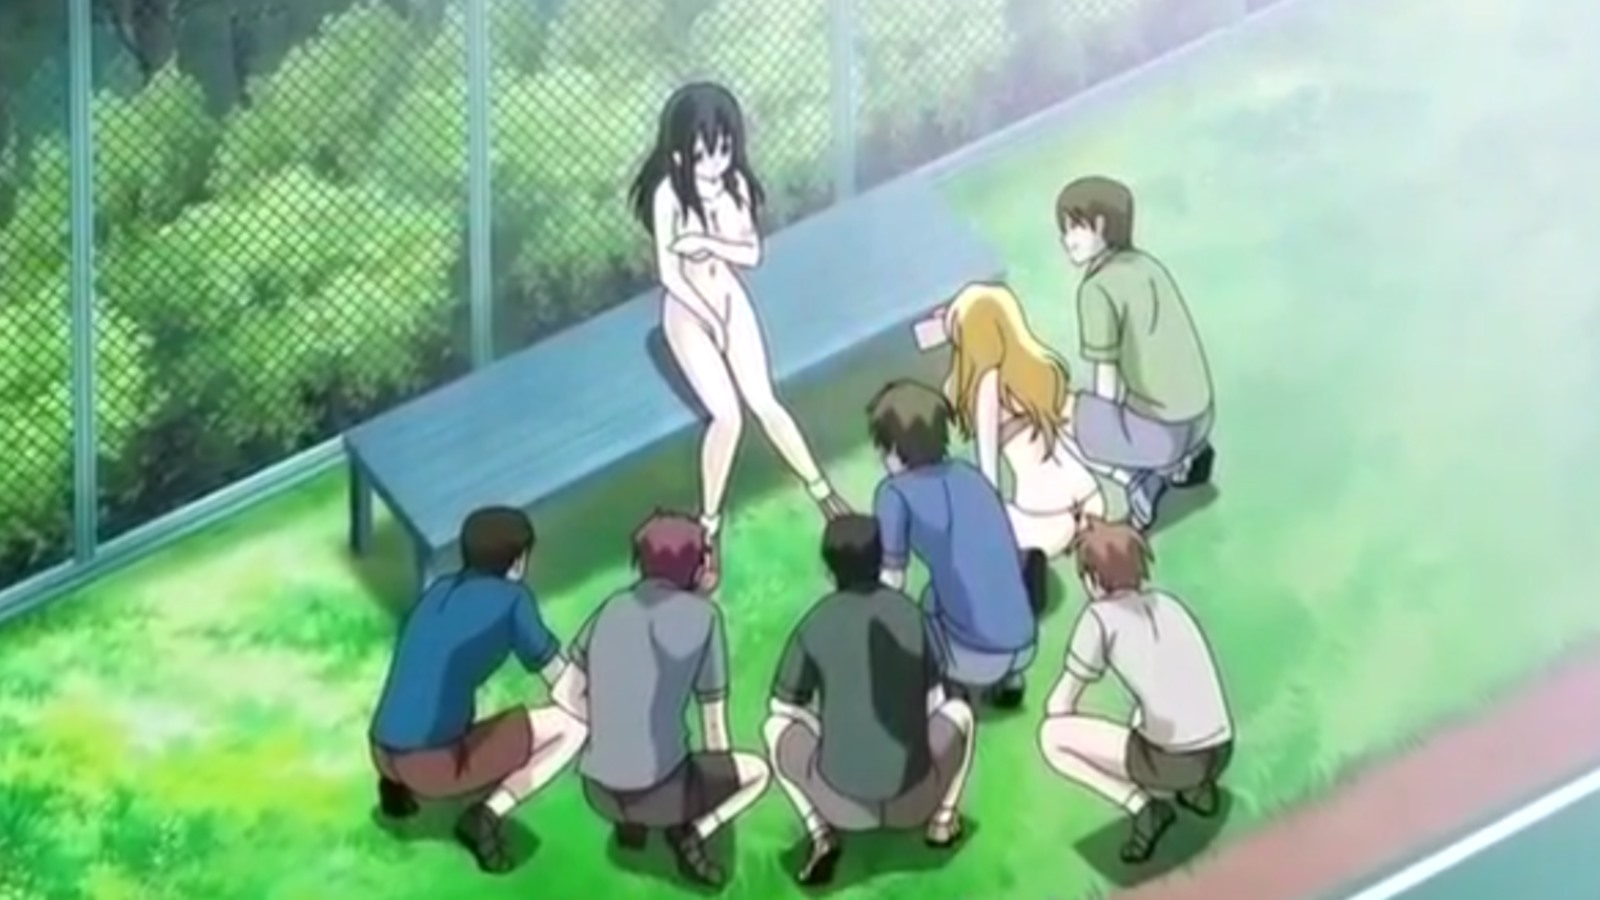 chloe northam share anime girl stripped naked photos